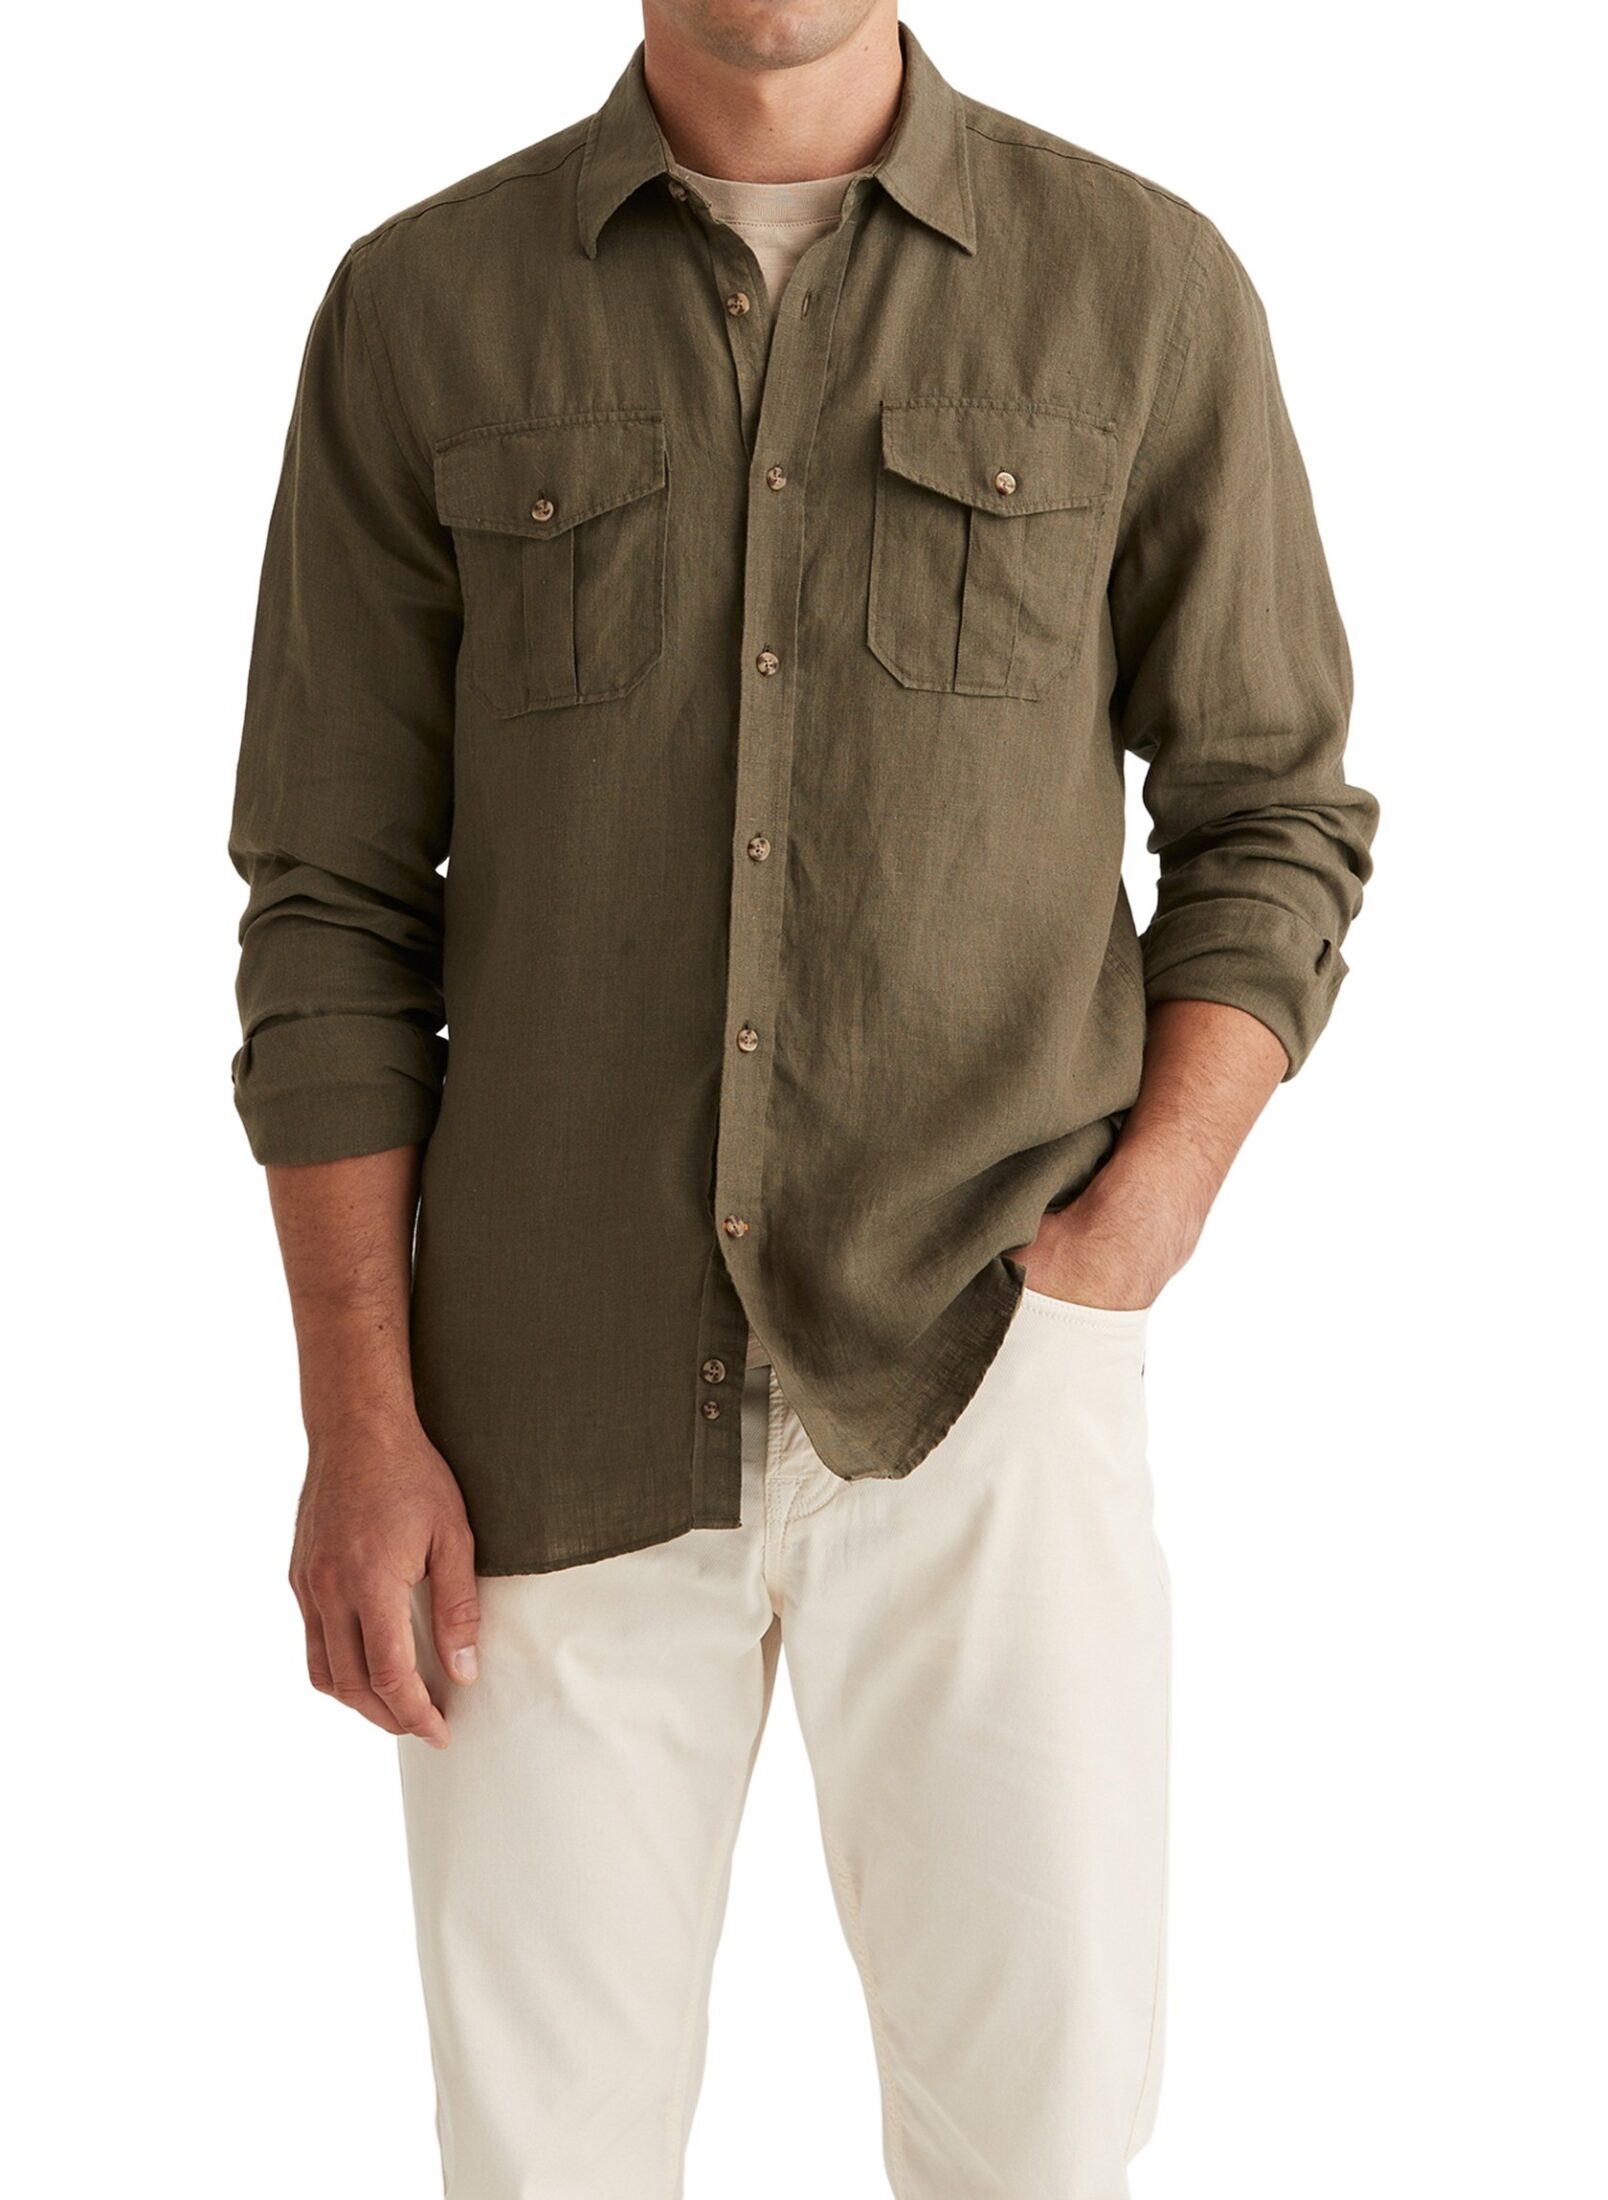 801605-safari-linen-shirt-77-olive-1